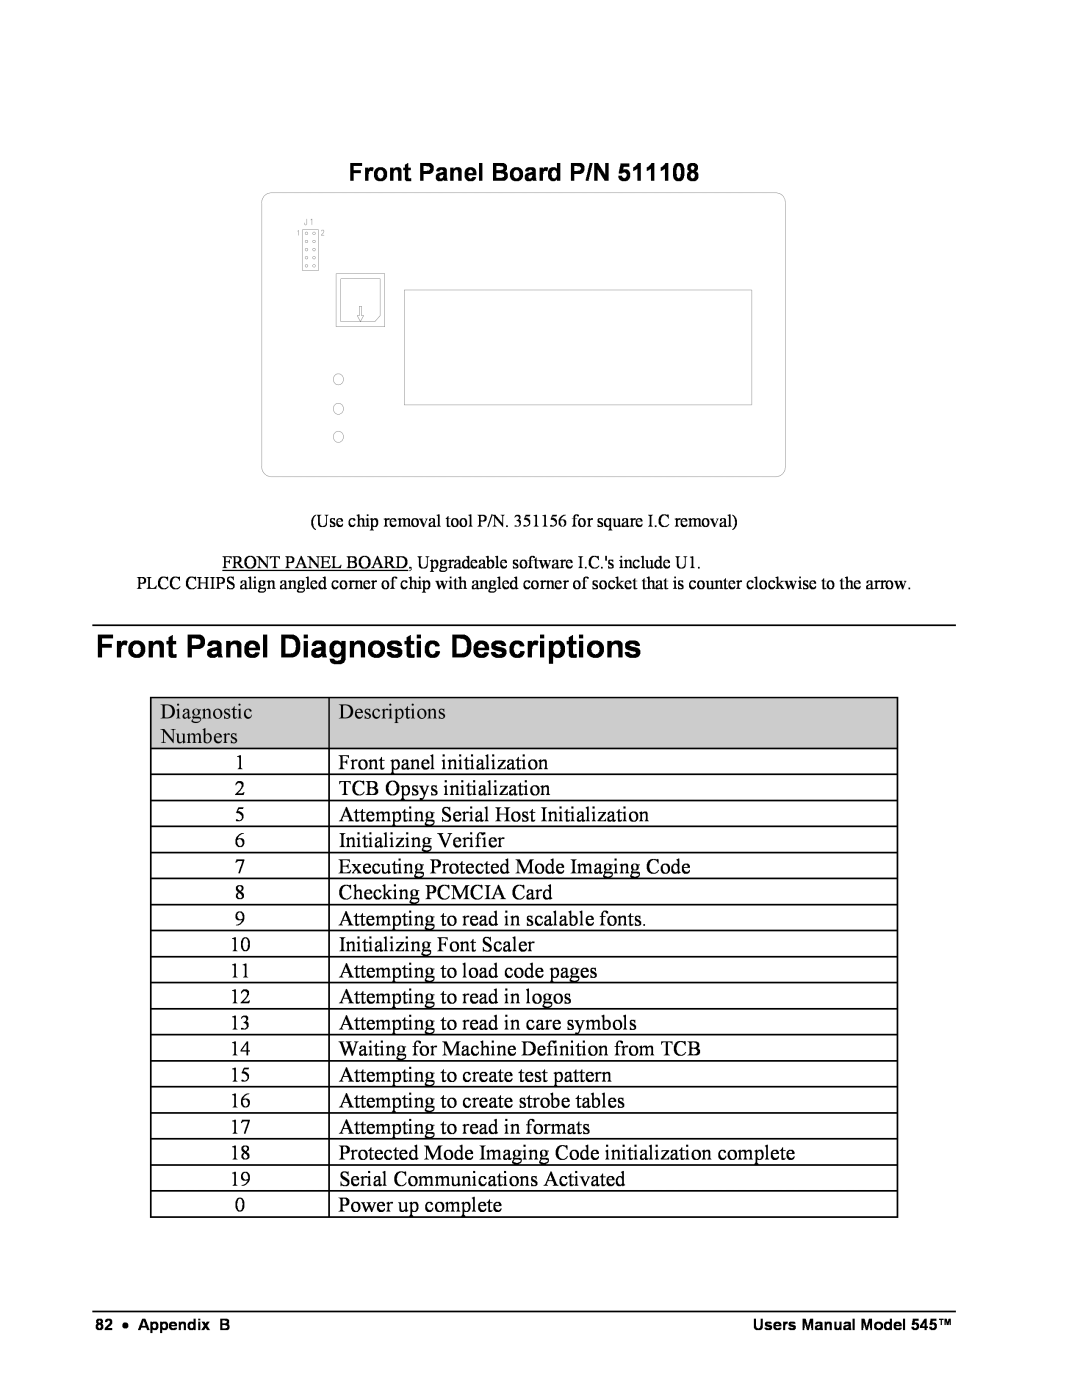 Paxar 545 user manual Front Panel Diagnostic Descriptions, Front Panel Board P/N 